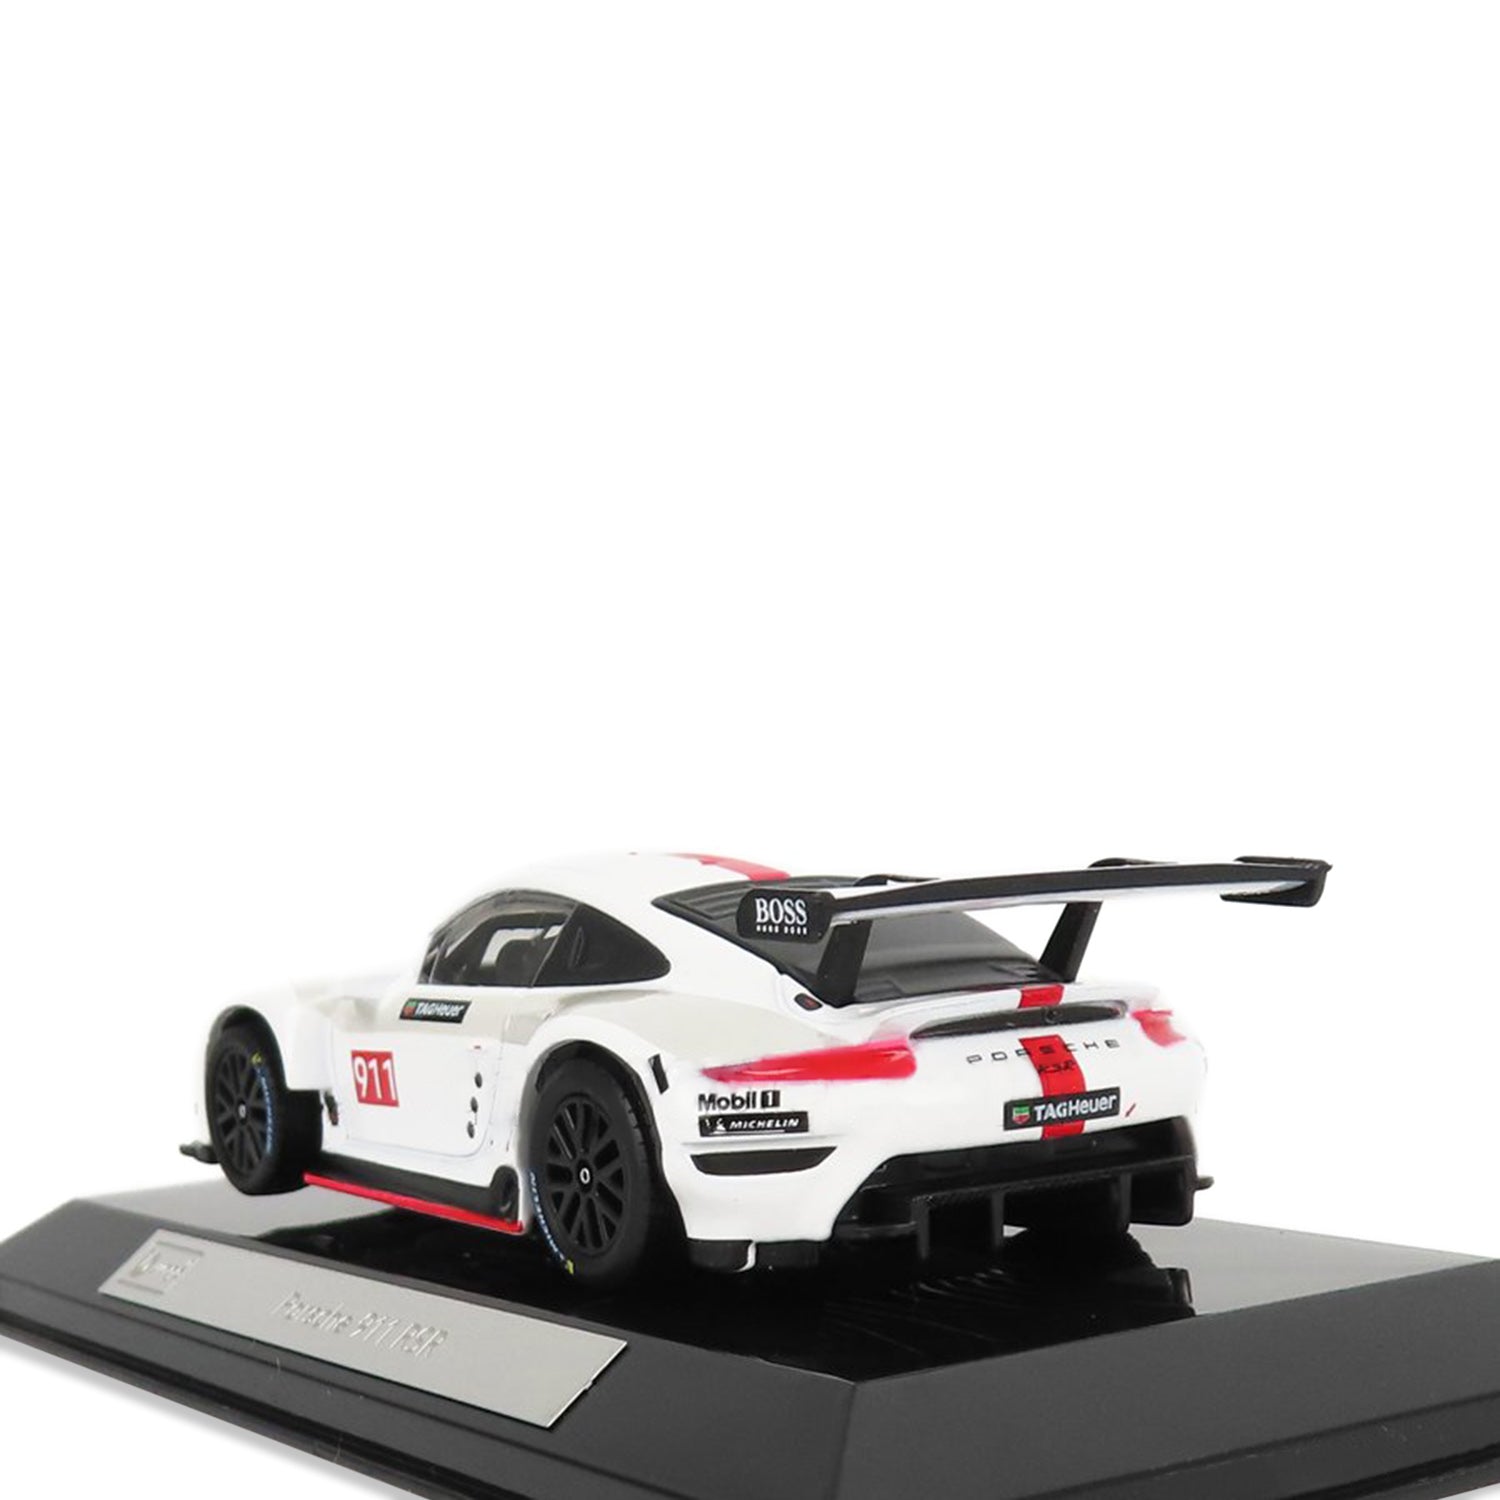 Porsche 911 991 RSR Coupe 2019 1:43 Car Model - Porsche Motorsport - Fueler™ 